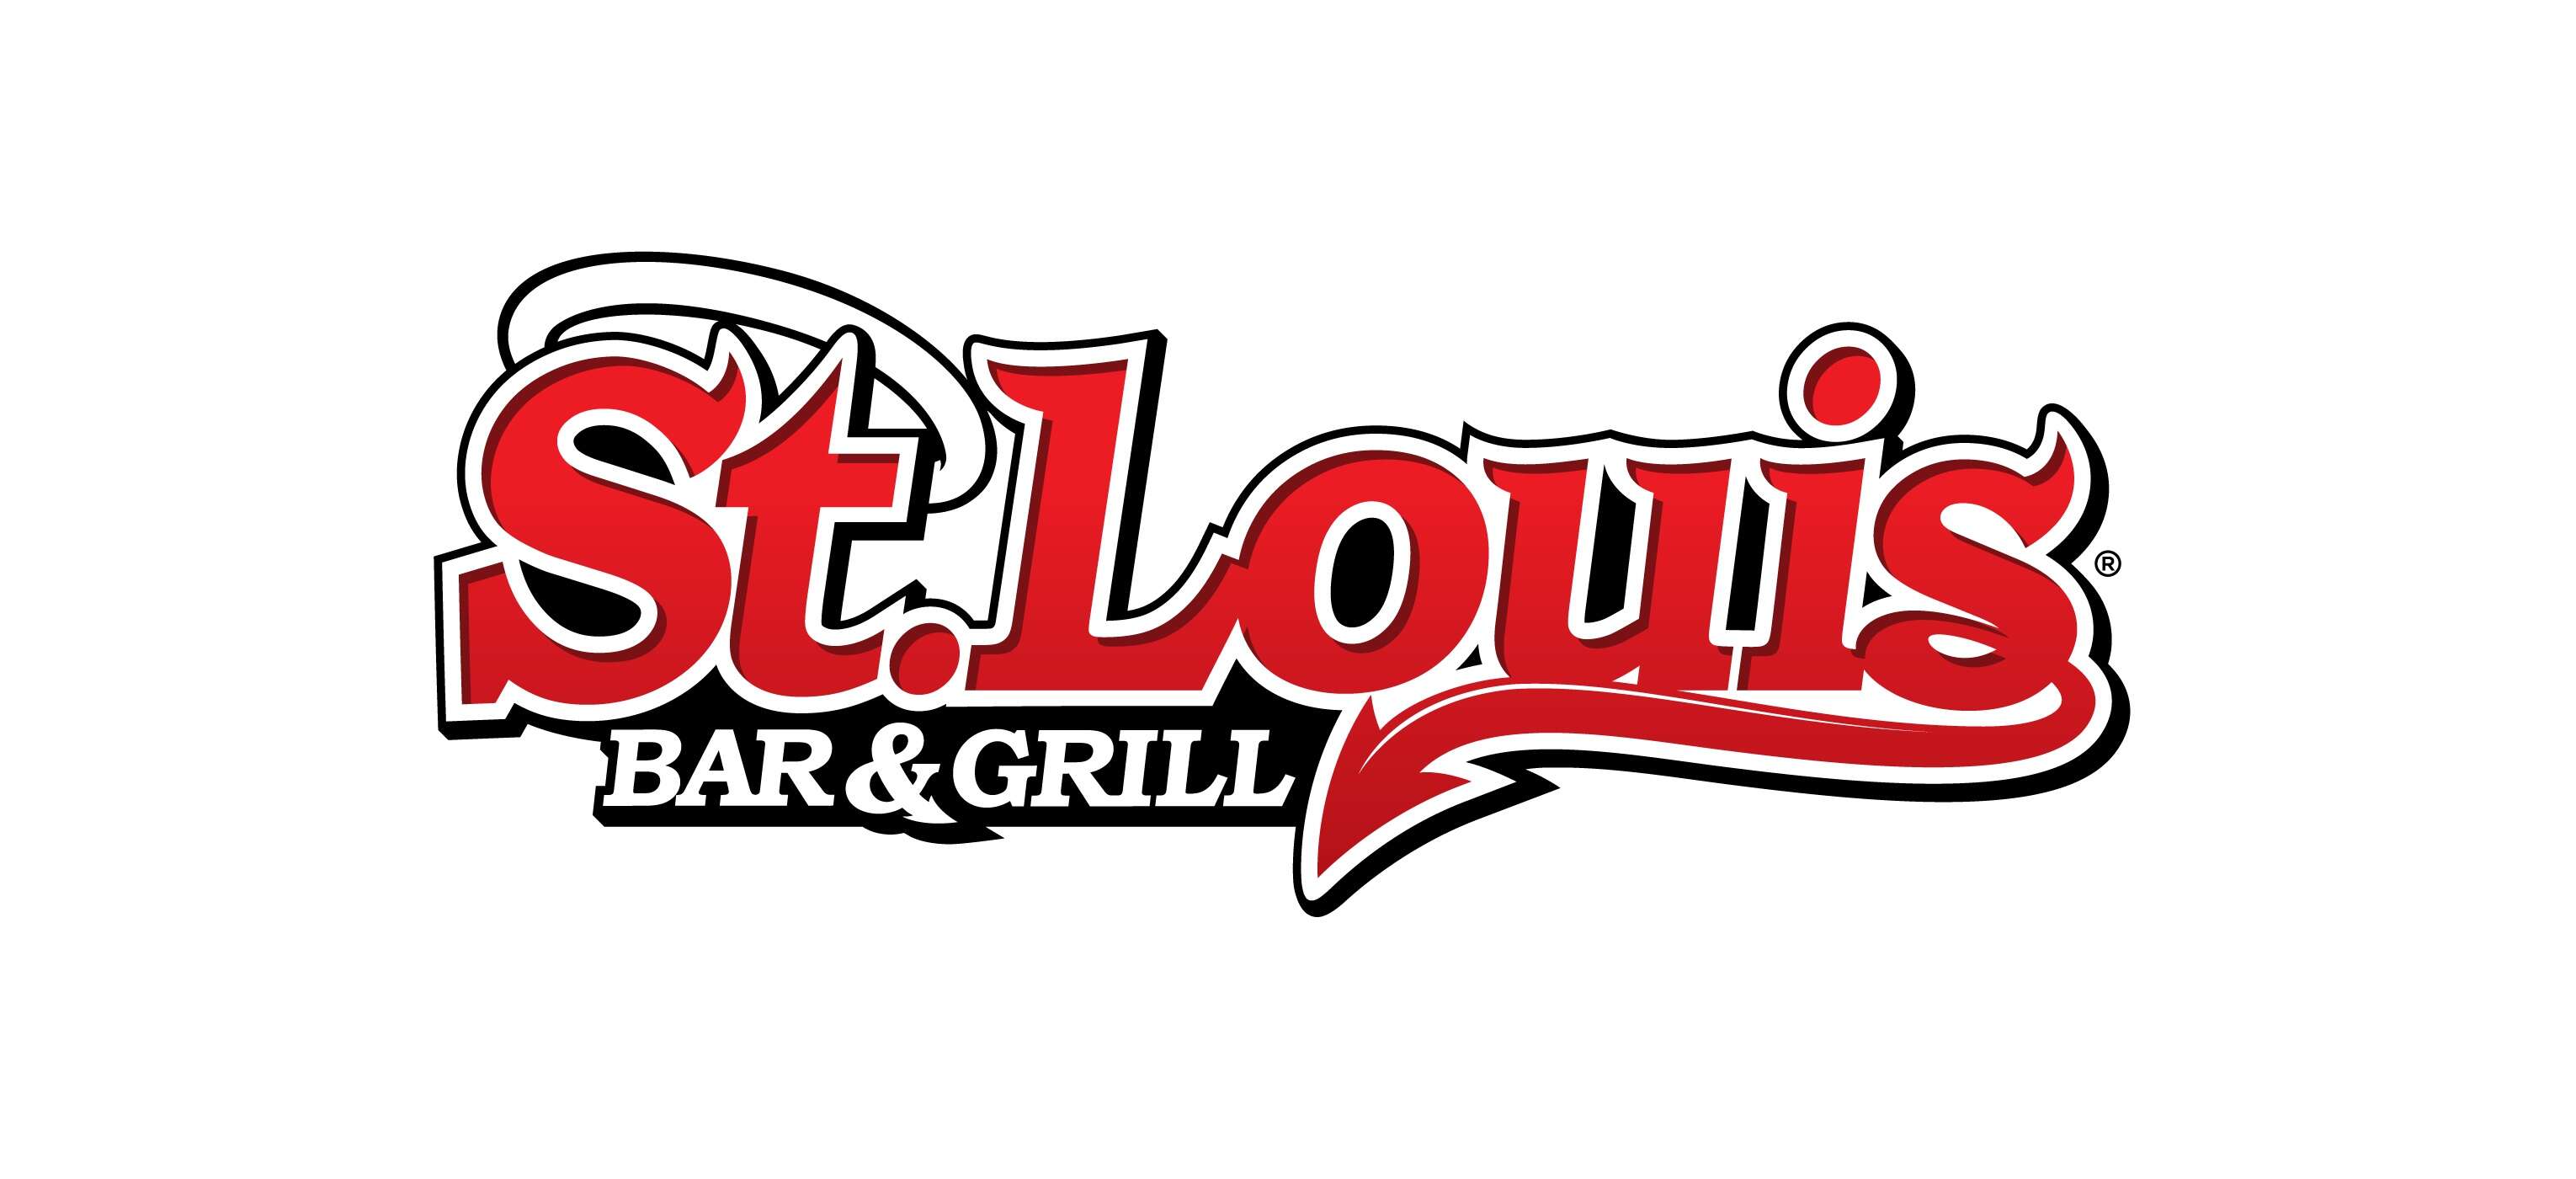 St Louis Bar & Grill